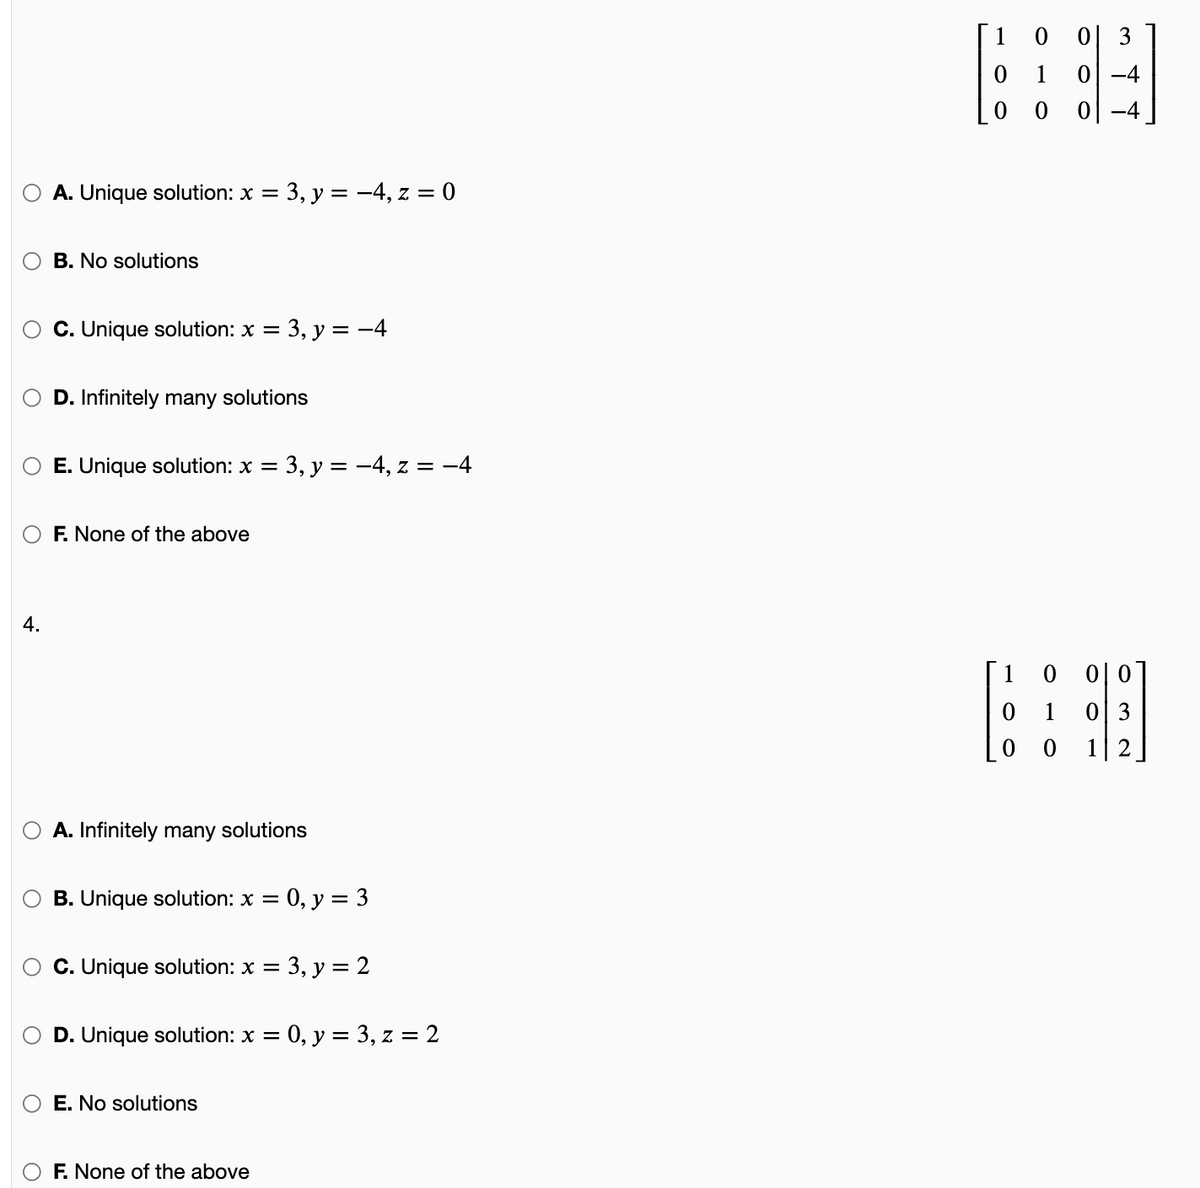 1 0 0| 3
0 1
-4
0 -4
A. Unique solution: x =
= 3, y = -4, z = 0
B. No solutions
C. Unique solution: x =
3, y = -4
D. Infinitely many solutions
E. Unique solution: x =
= 3, y = -4, z = -4
F. None of the above
4.
0 0|0
0| 3
1 2
1
1
0 0
A. Infinitely many solutions
B. Unique solution: x =
0, y = 3
C. Unique solution: x =
3, у %3D2
D. Unique solution: x =
0, у %3 3, z %3D2
E. No solutions
F. None of the above
